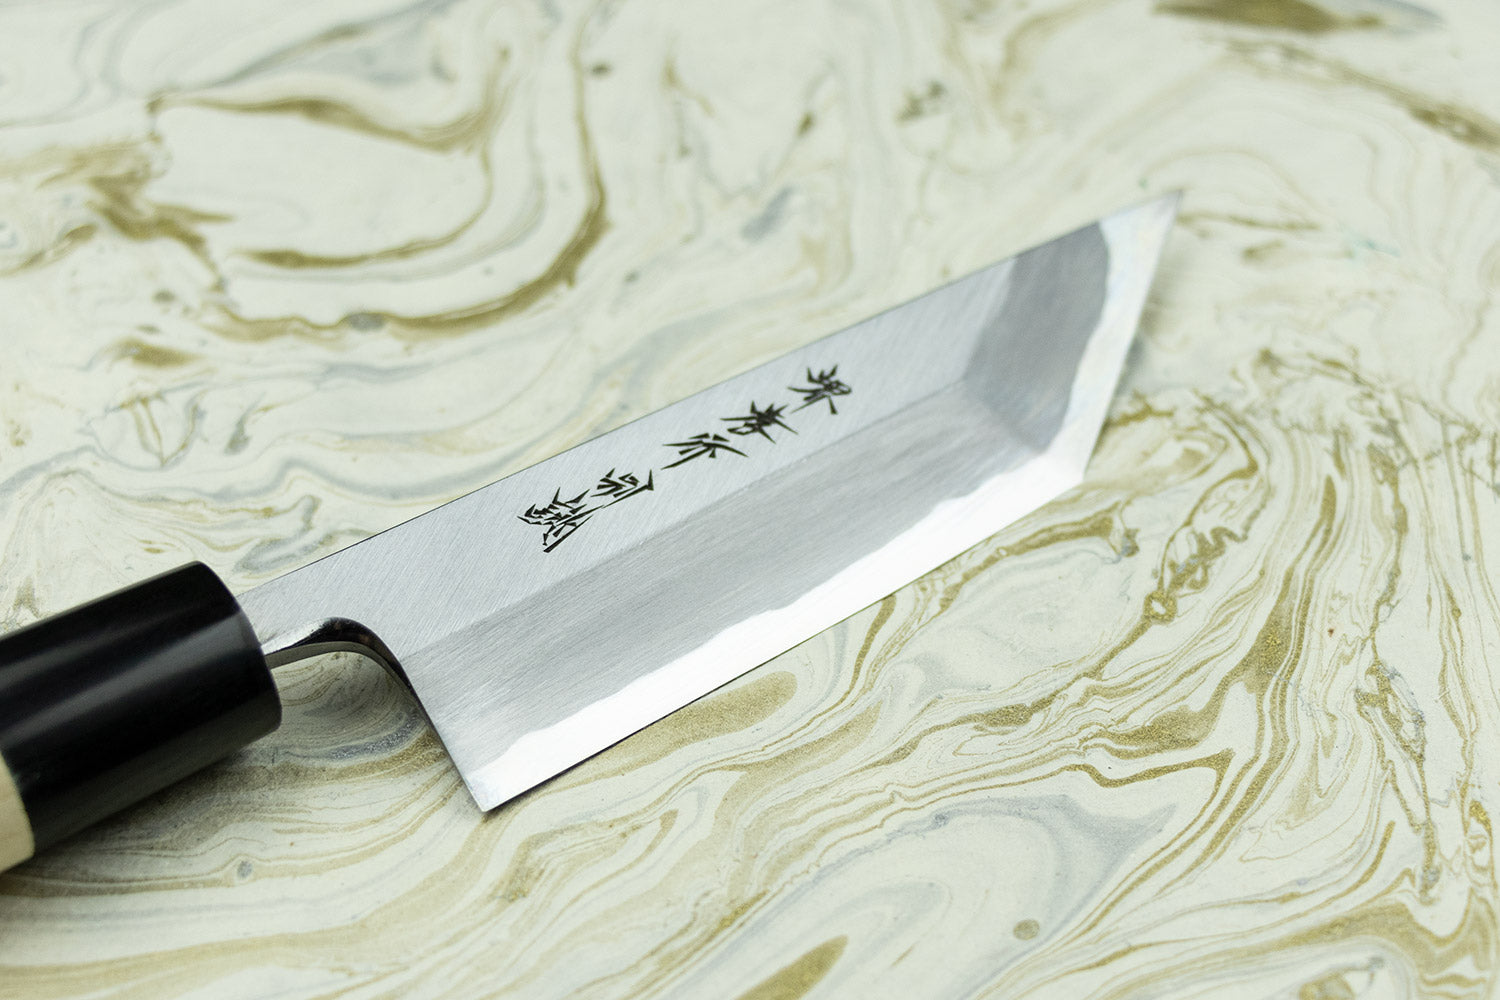 Sakai Takayuki Edo Style Eel Knife 135mm with Eel Spike